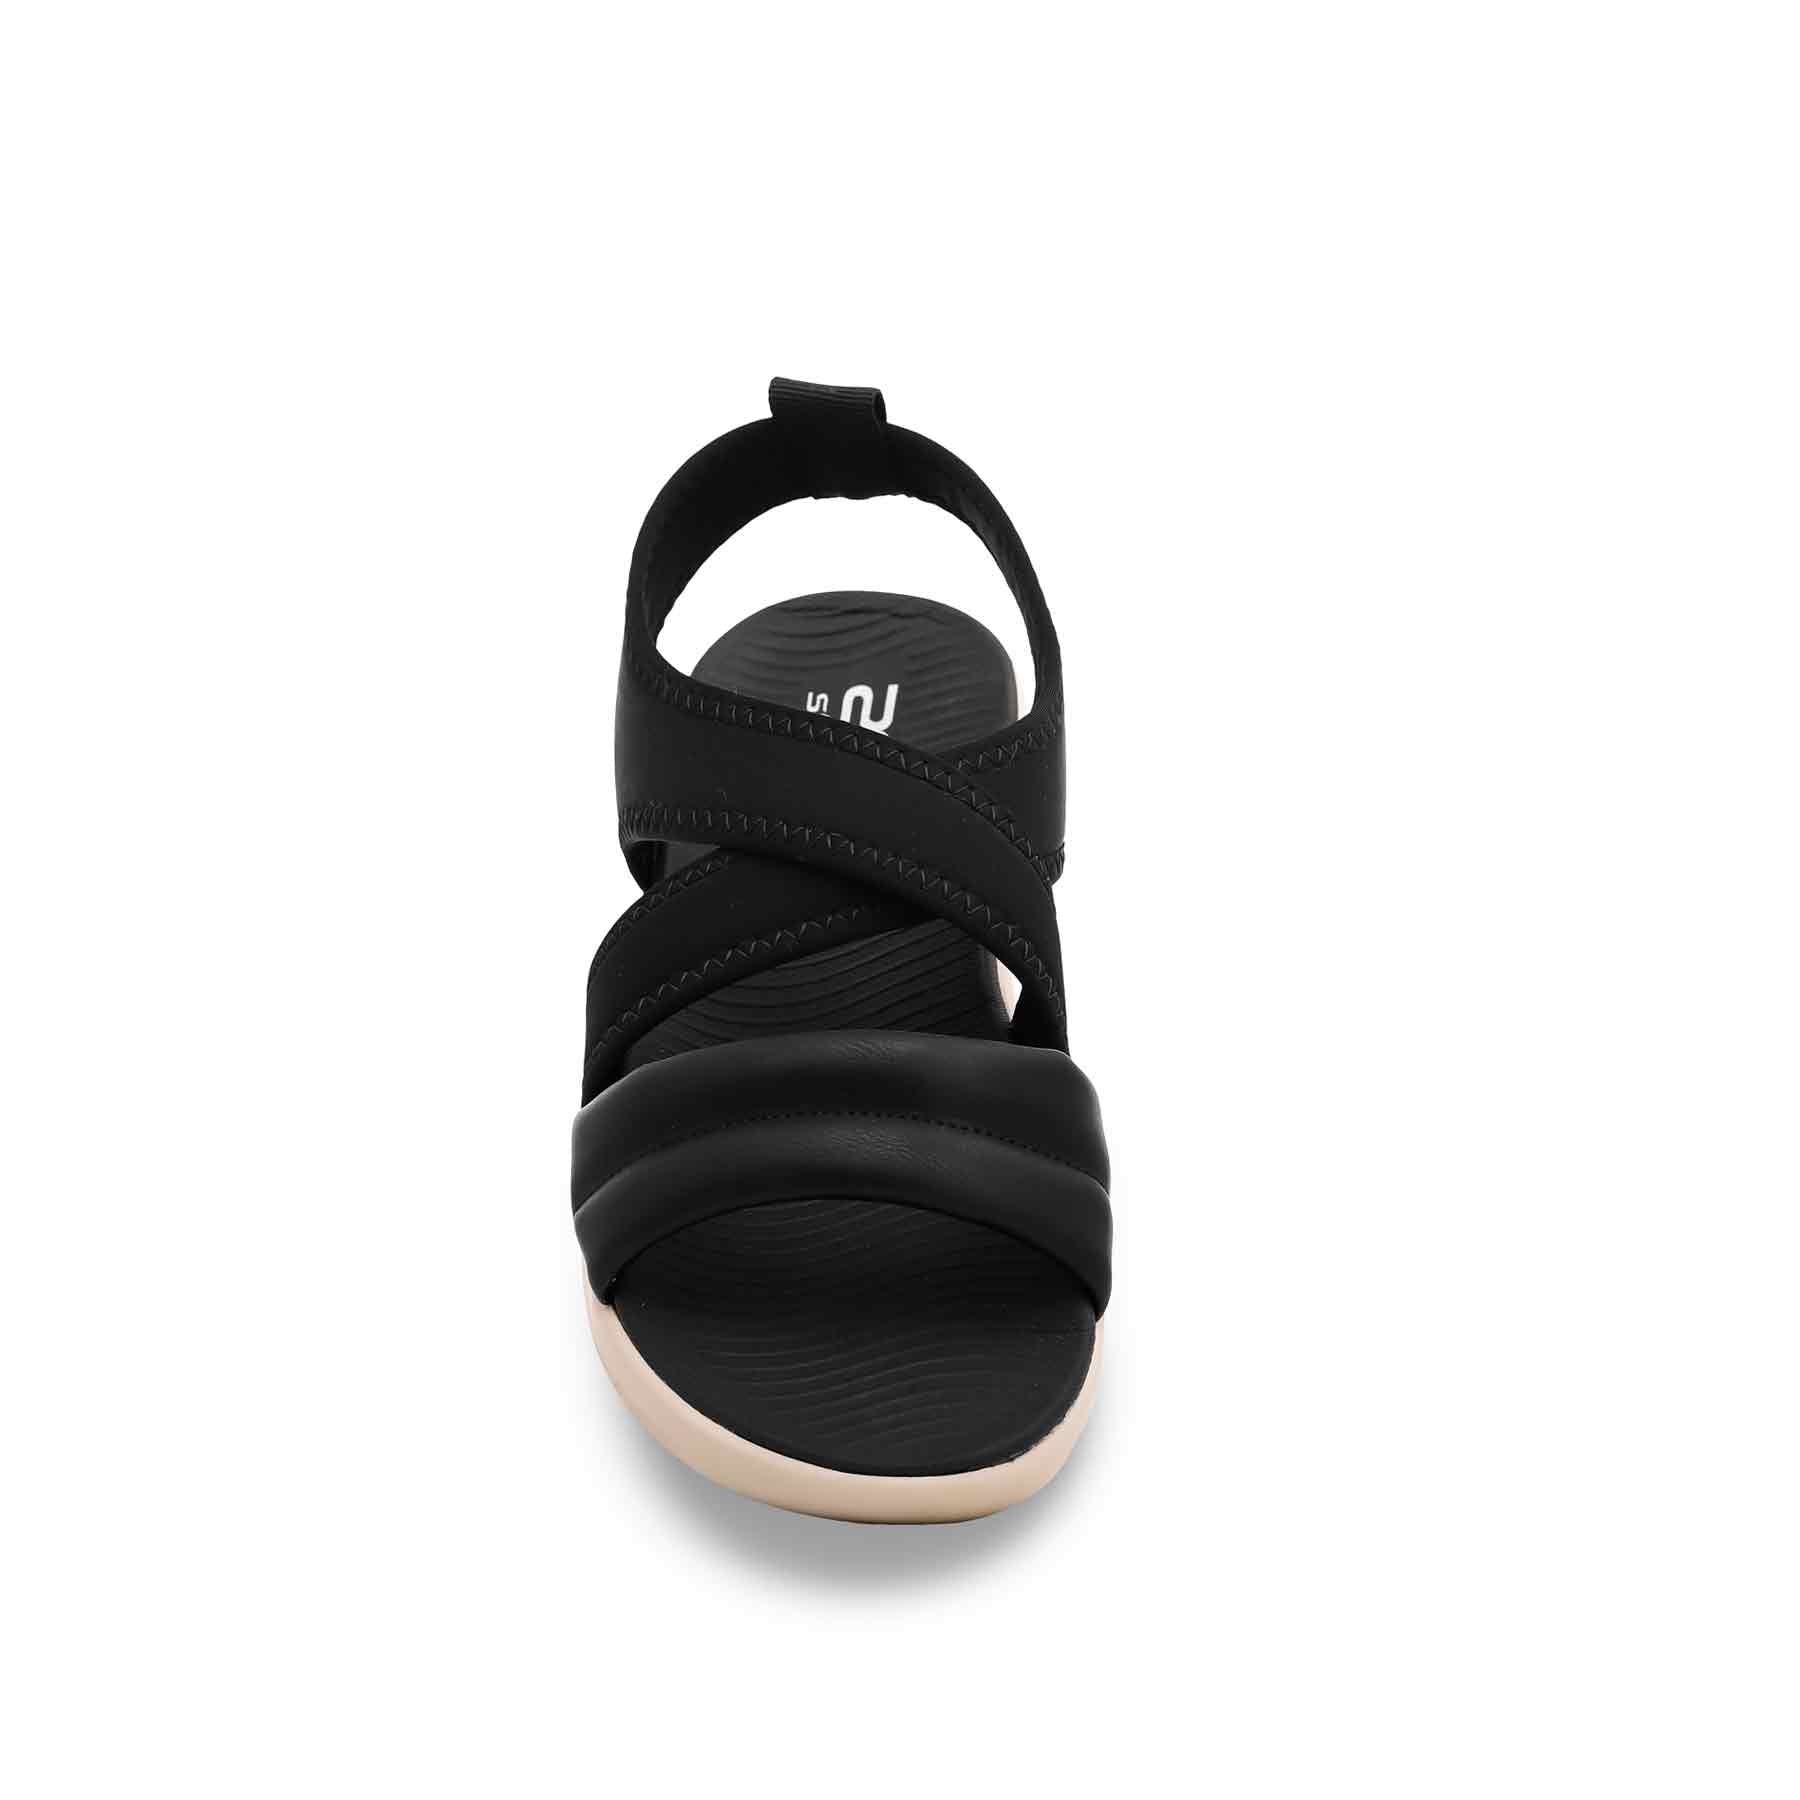 Black Formal Sandal PU0009